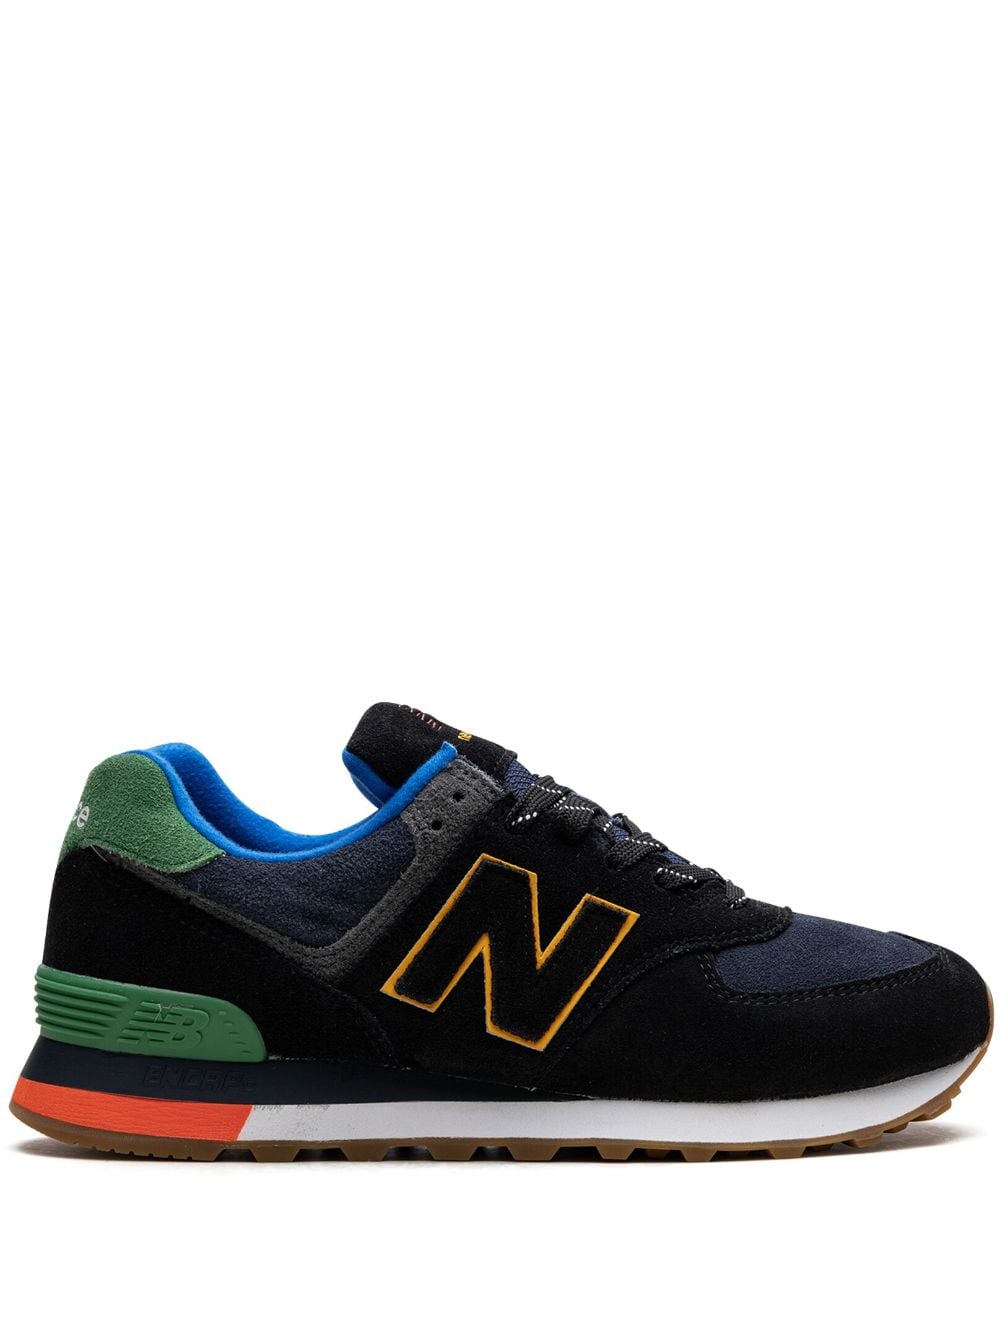 New Balance 574 "Multicolor" sneakers - Black